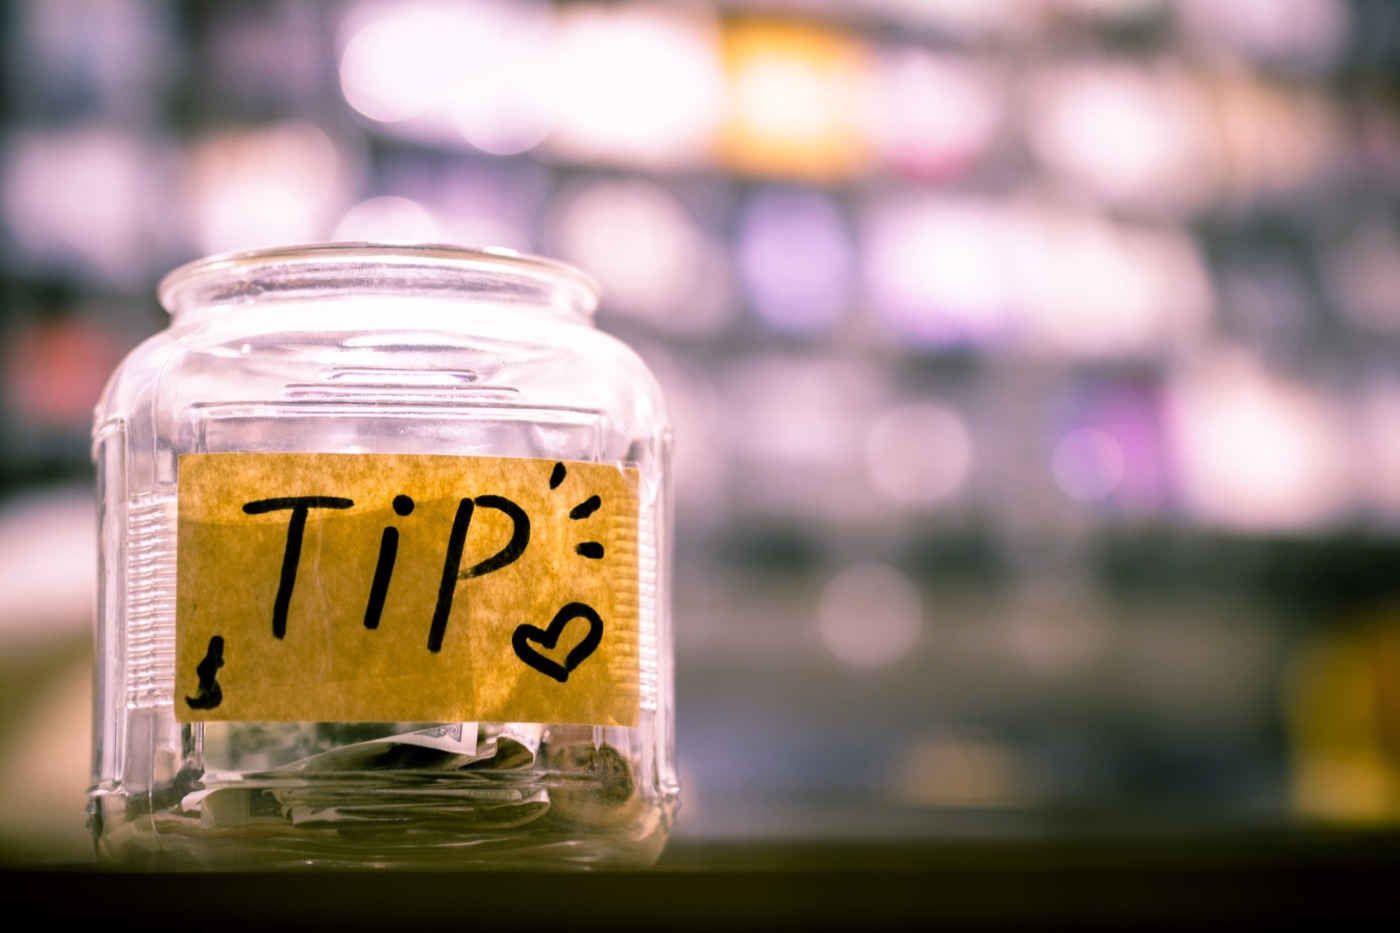 Tip jar containing money